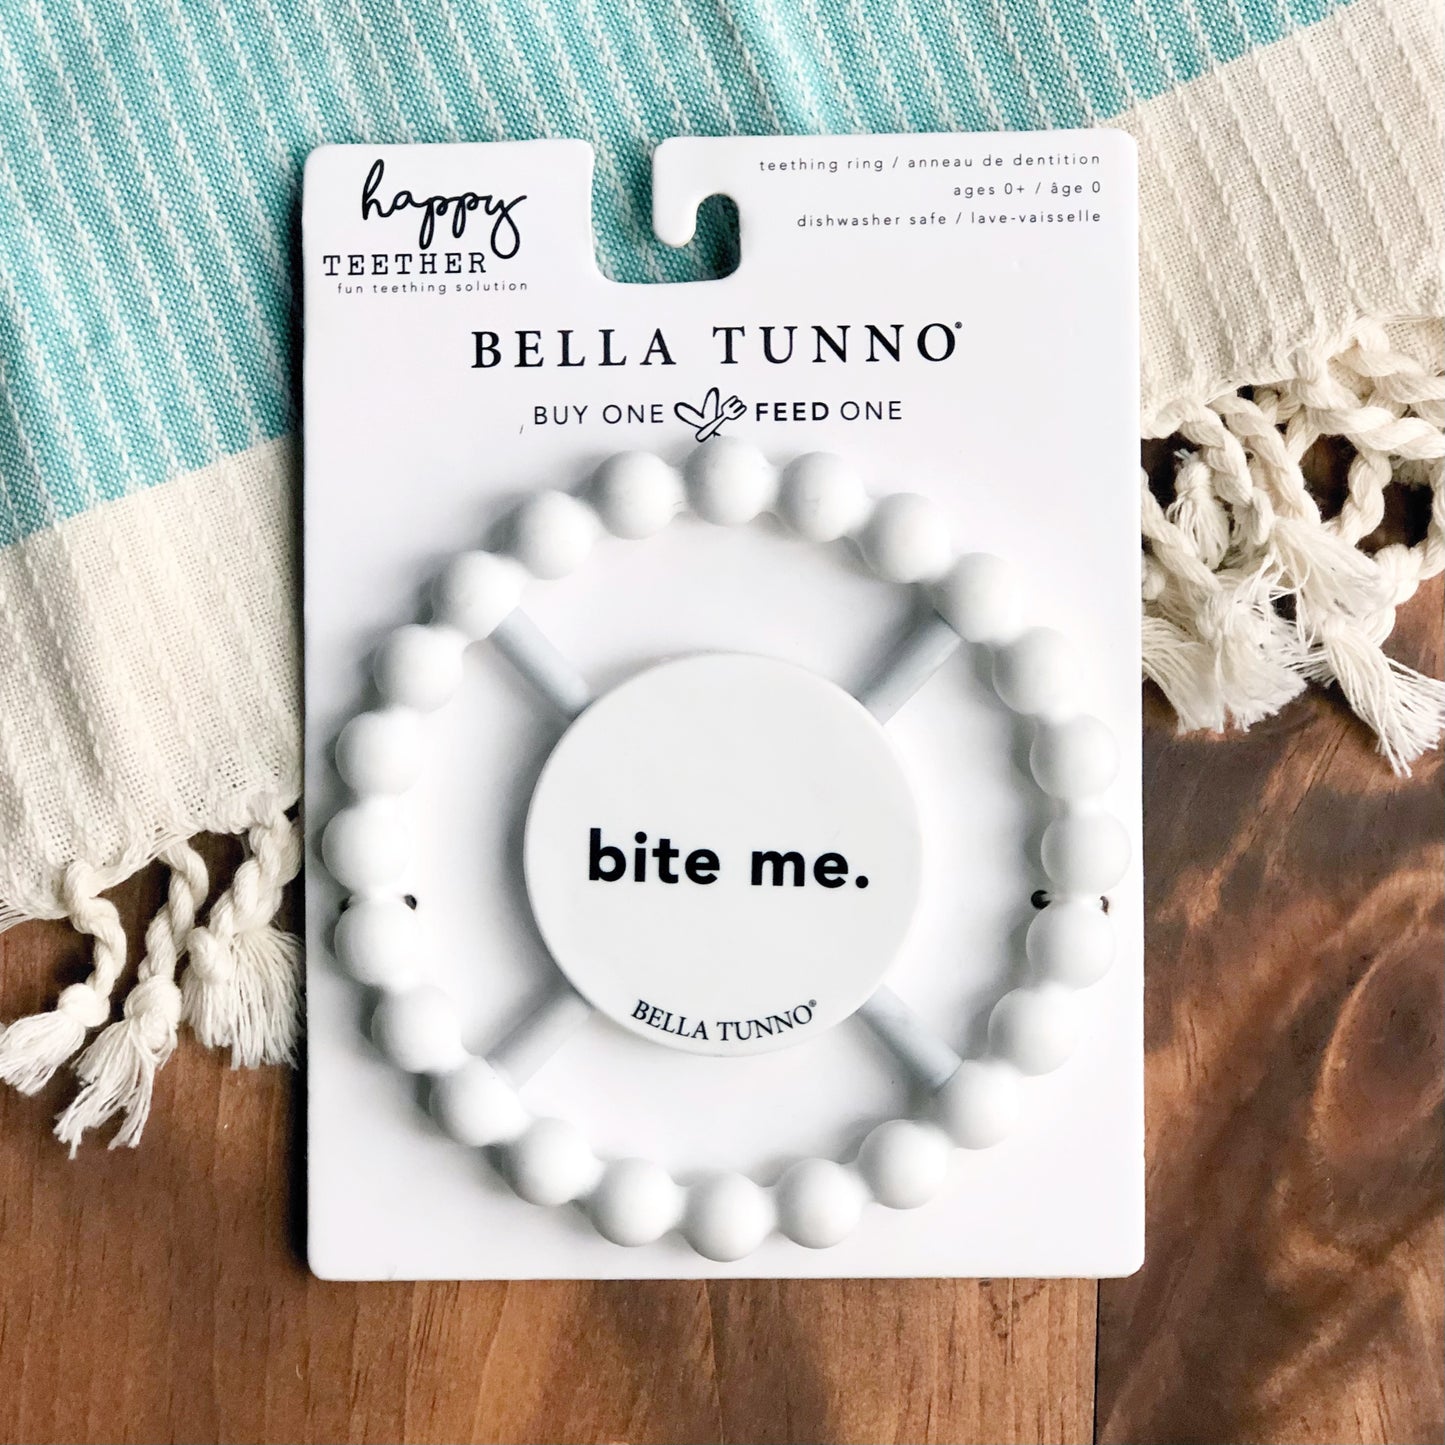 Bella Tunno: Teethers Bite Me